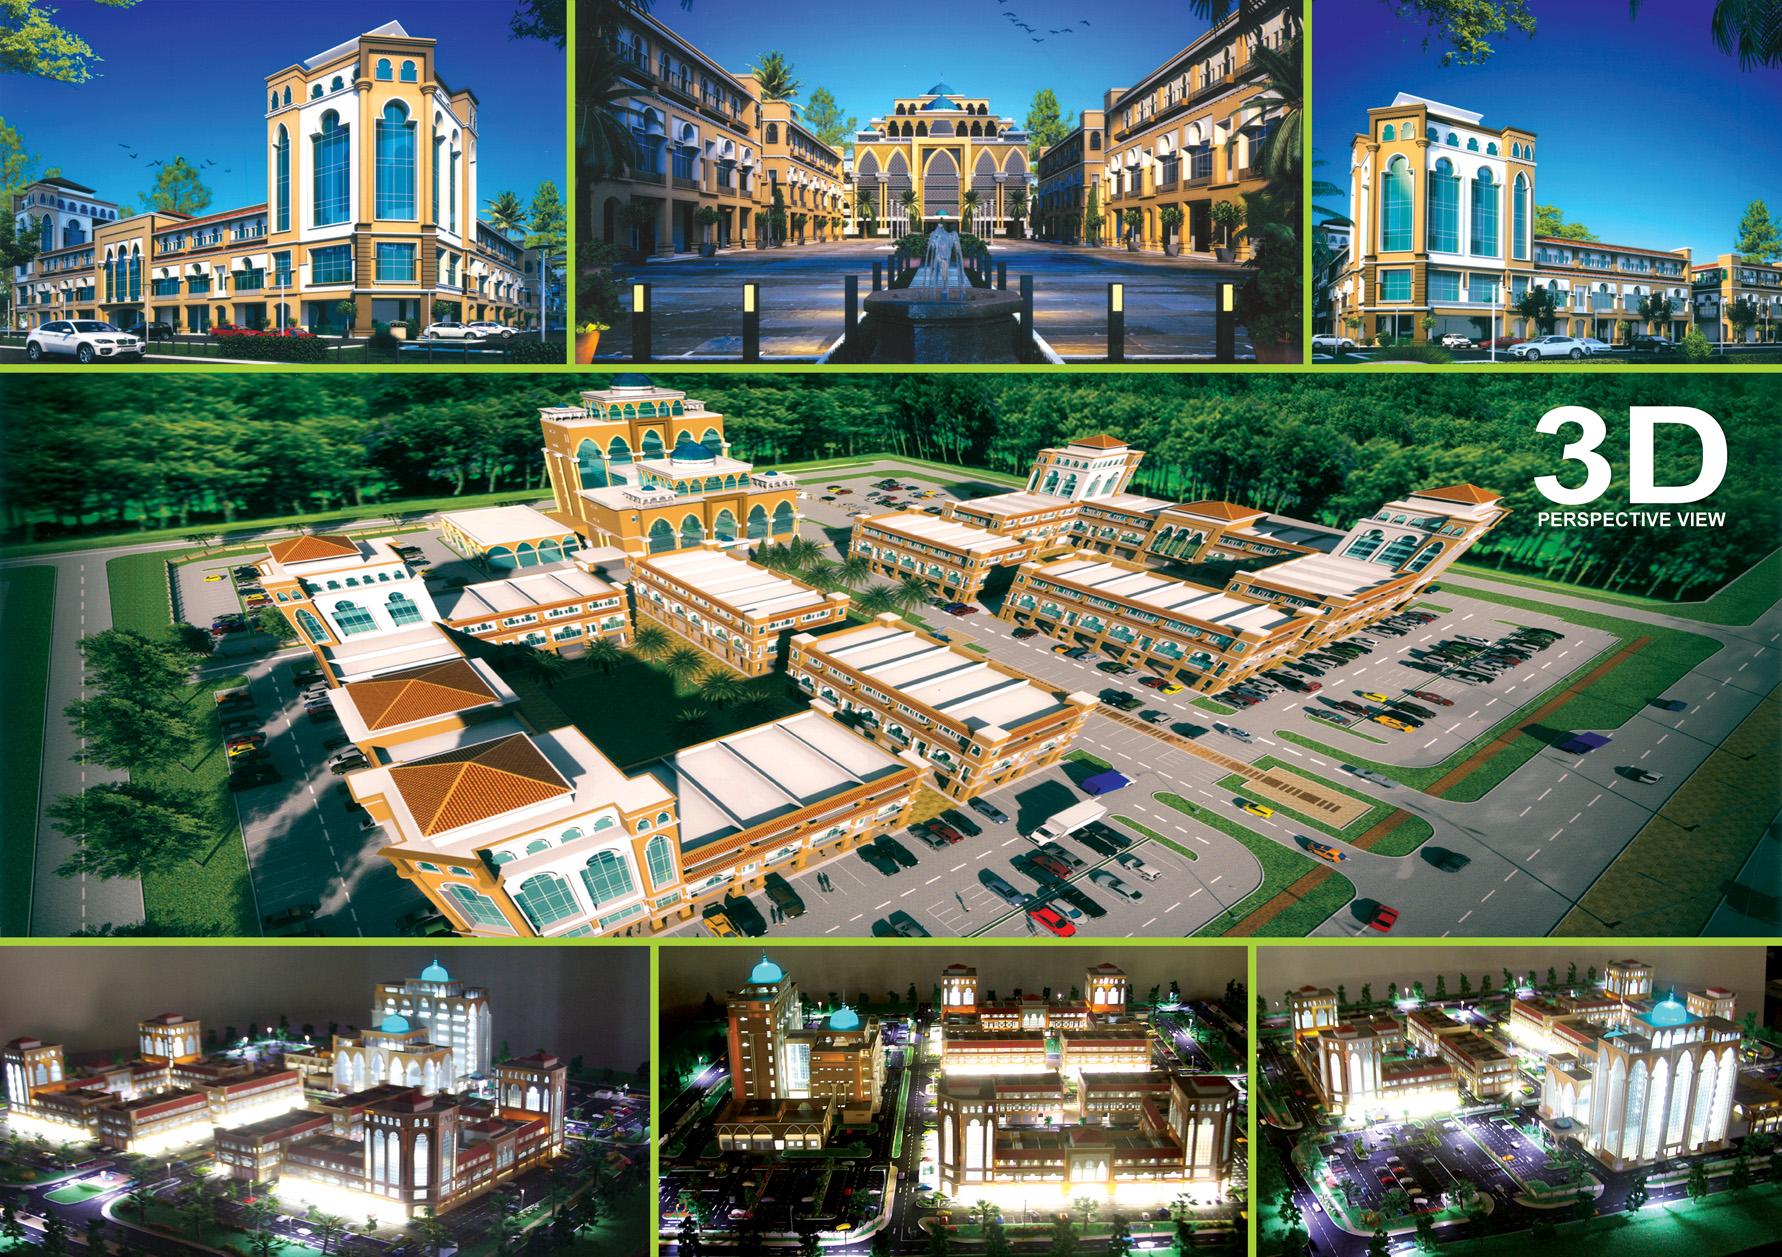 3D views of Miri 101 Commercial Centre